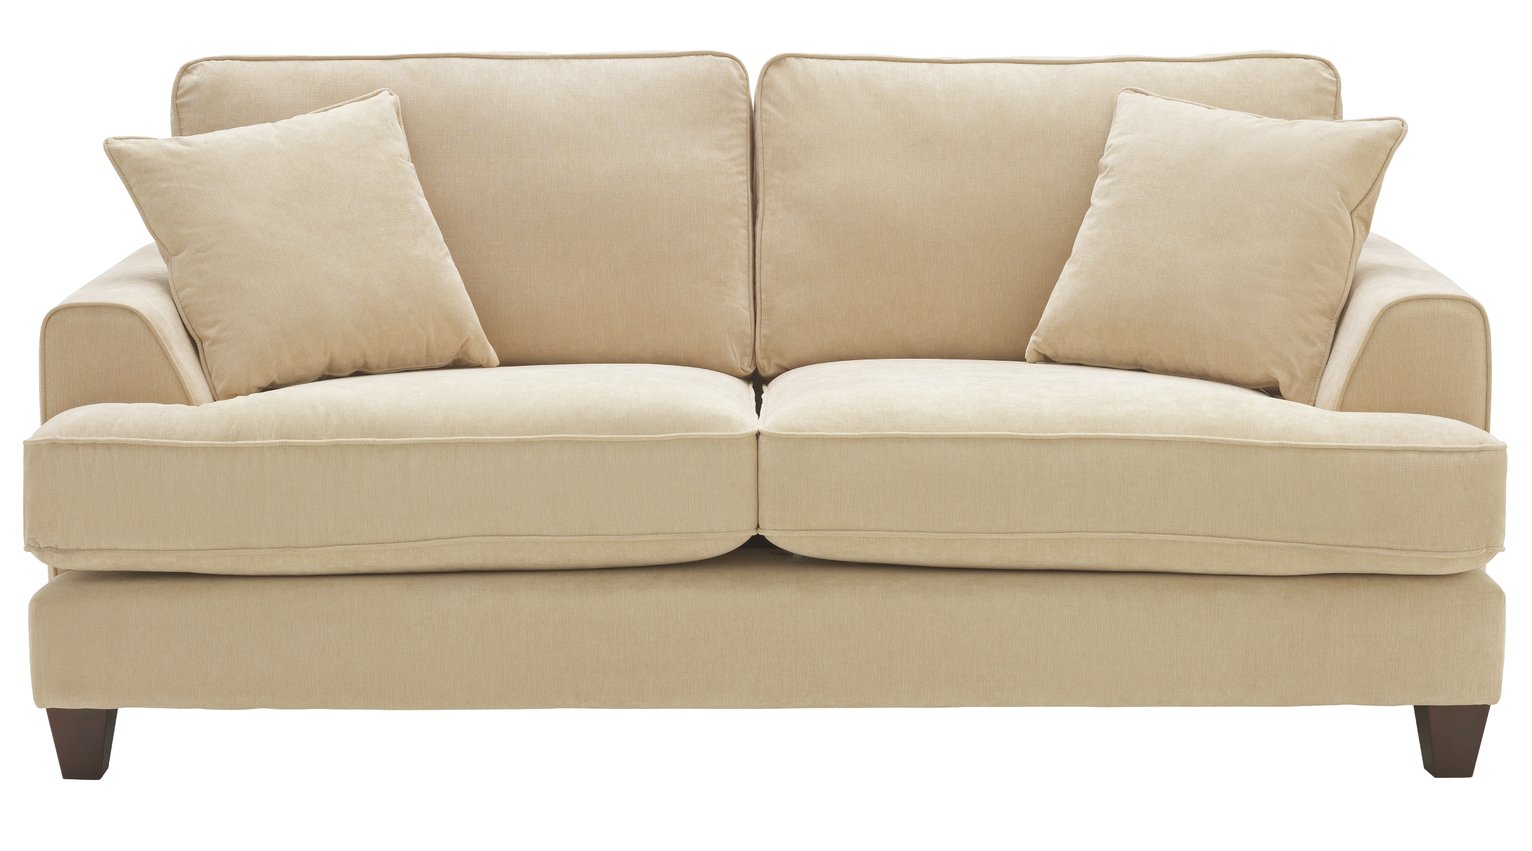 Argos Home Hampstead 3 Seater Fabric Sofa - Beige